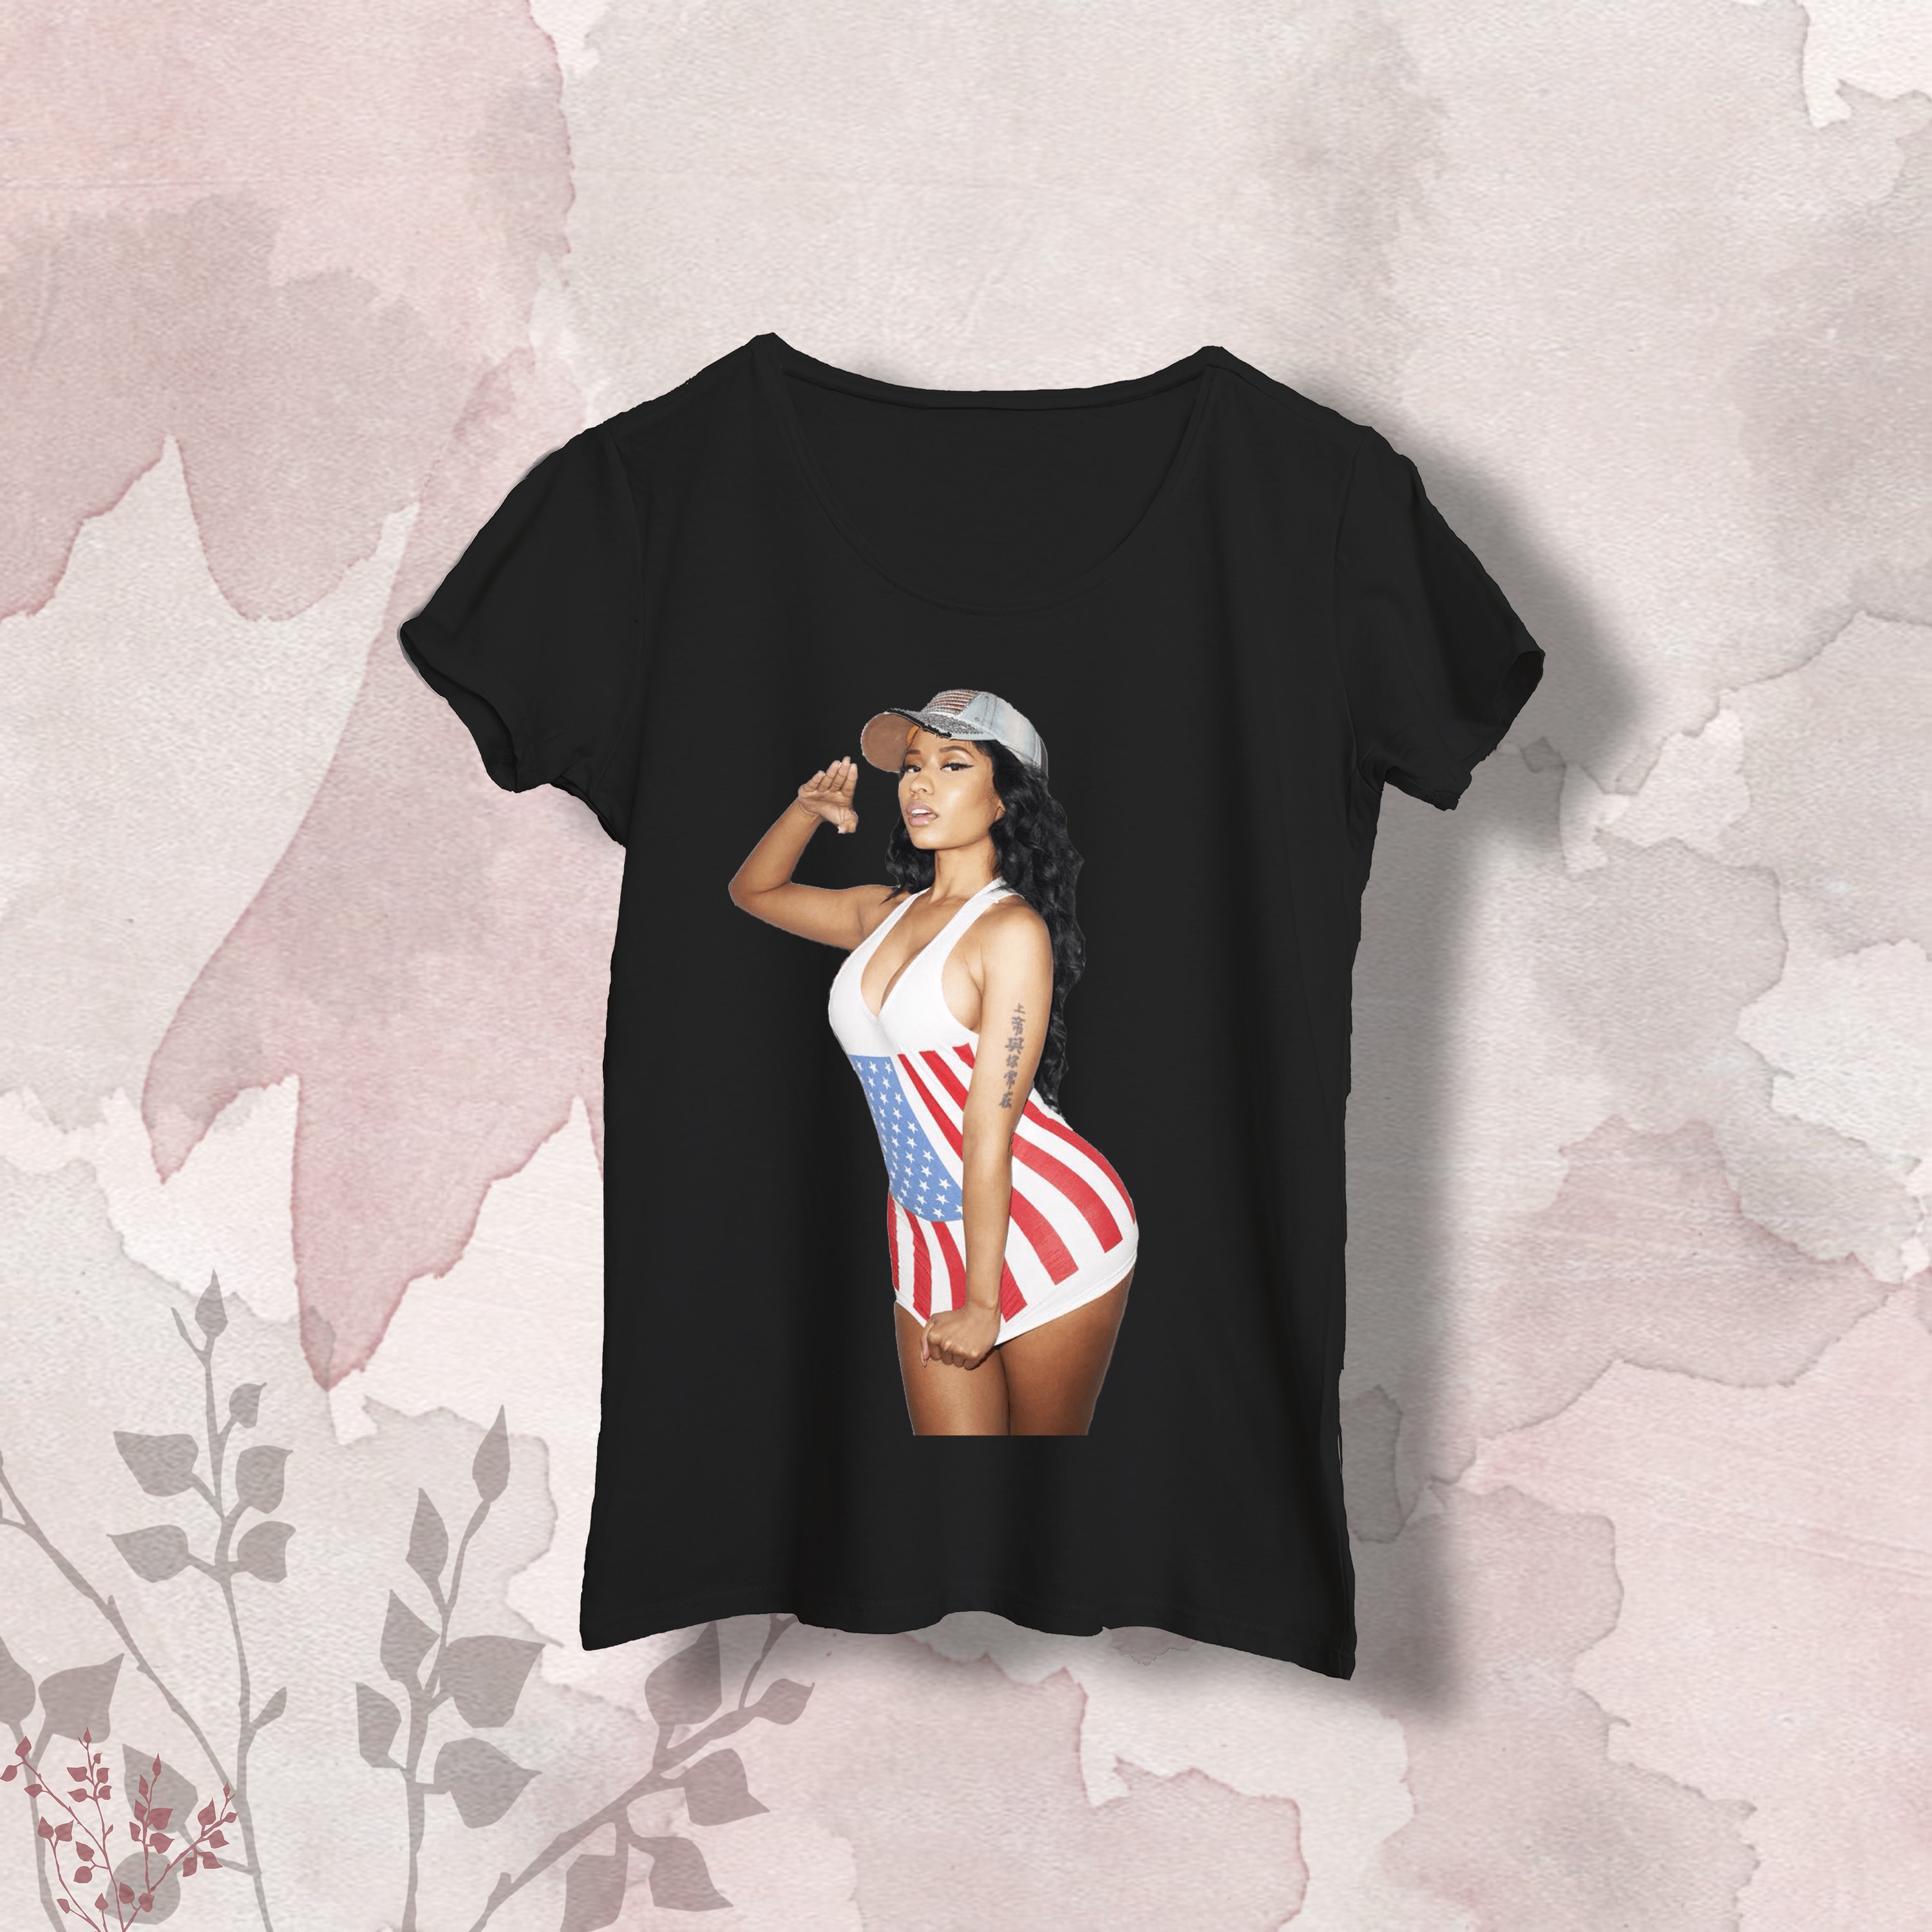 Discover Nicki Minaj Women and Men Shirt, vintage 90s style shirt